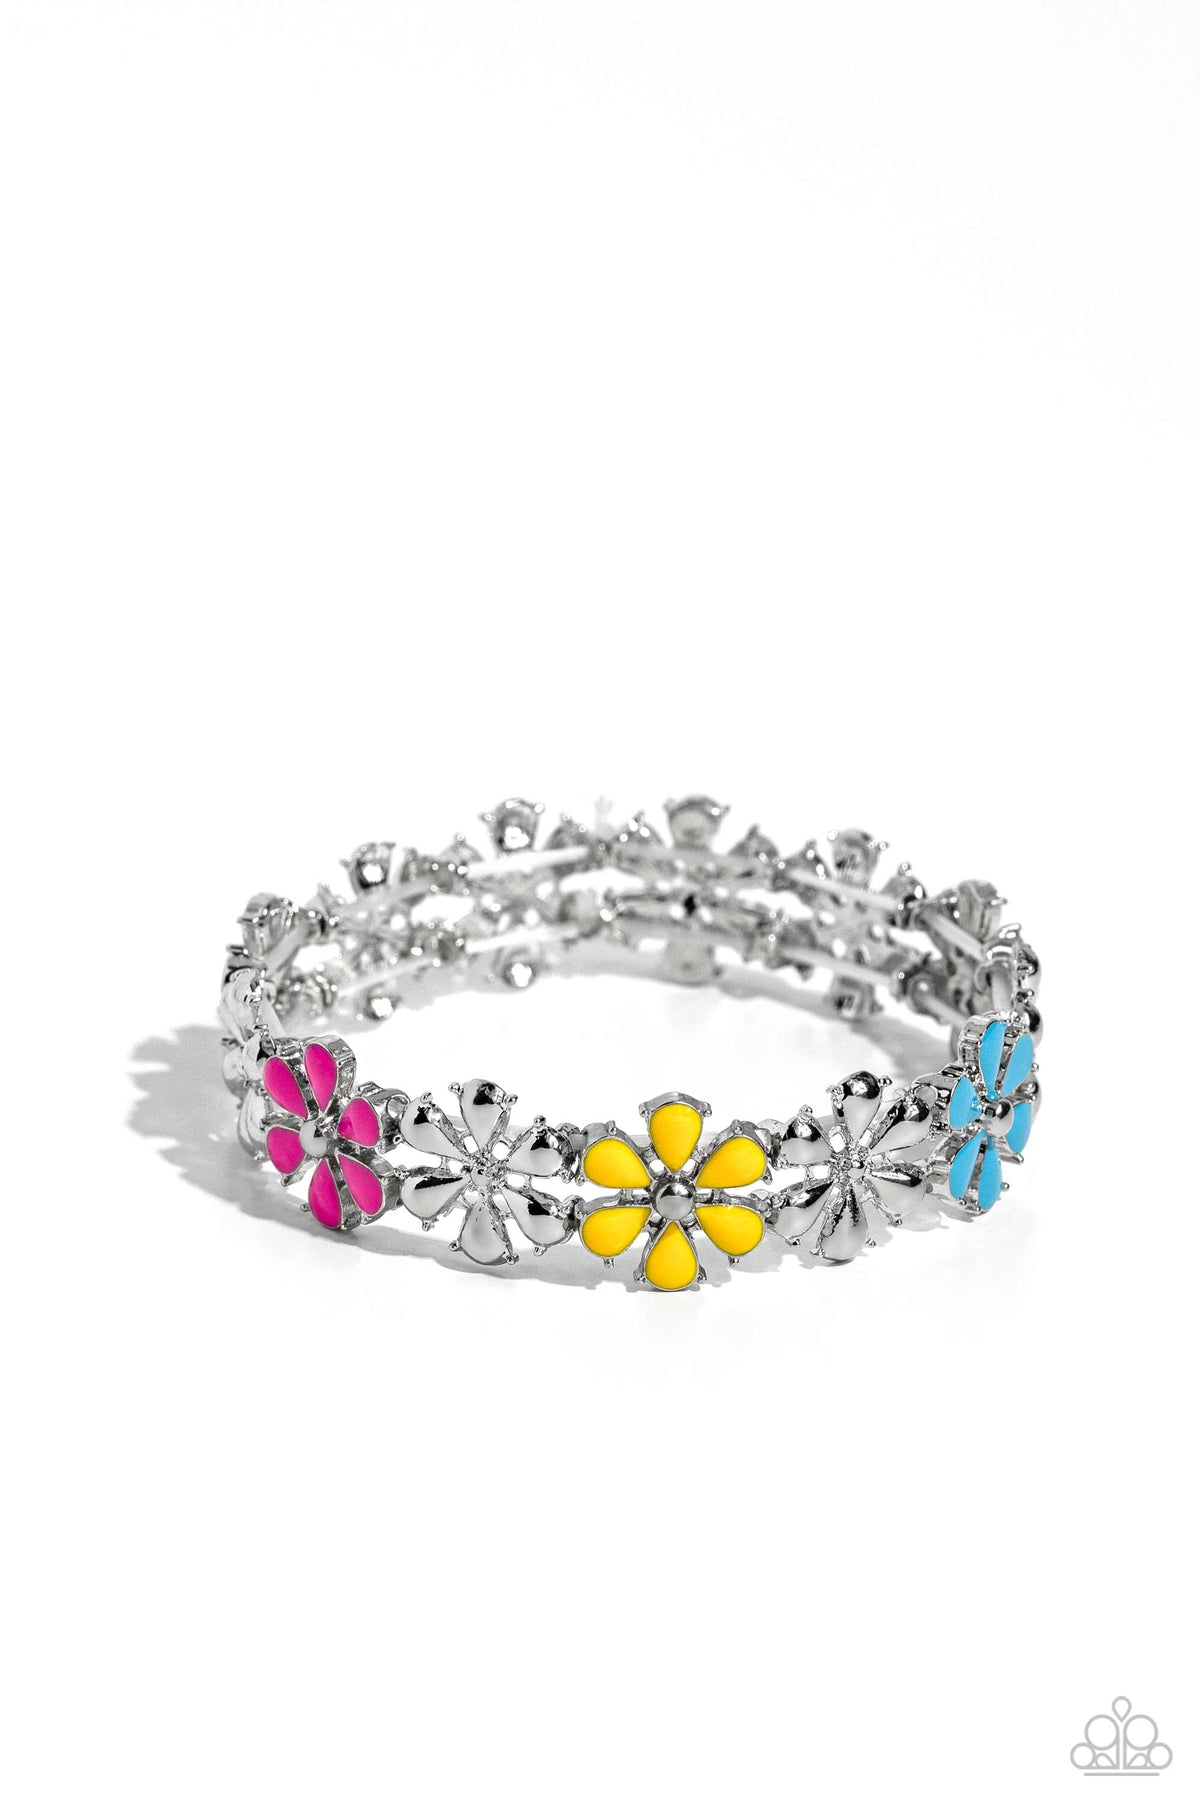 Floral Fair Multi Flower Bracelet - Paparazzi Accessories- lightbox - CarasShop.com - $5 Jewelry by Cara Jewels